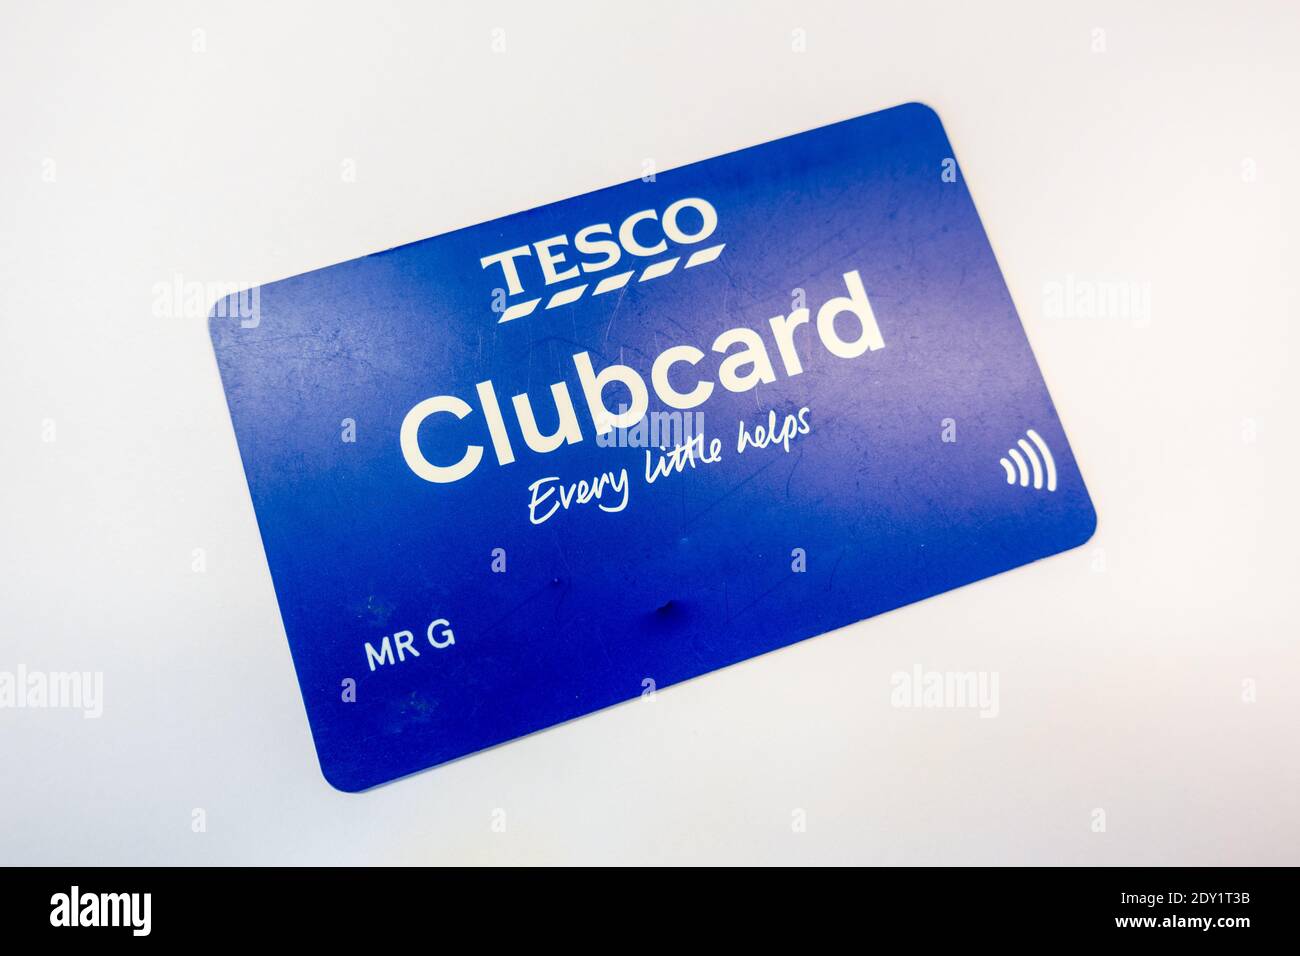 Tesco Clubcard new contactless version Stock Photo